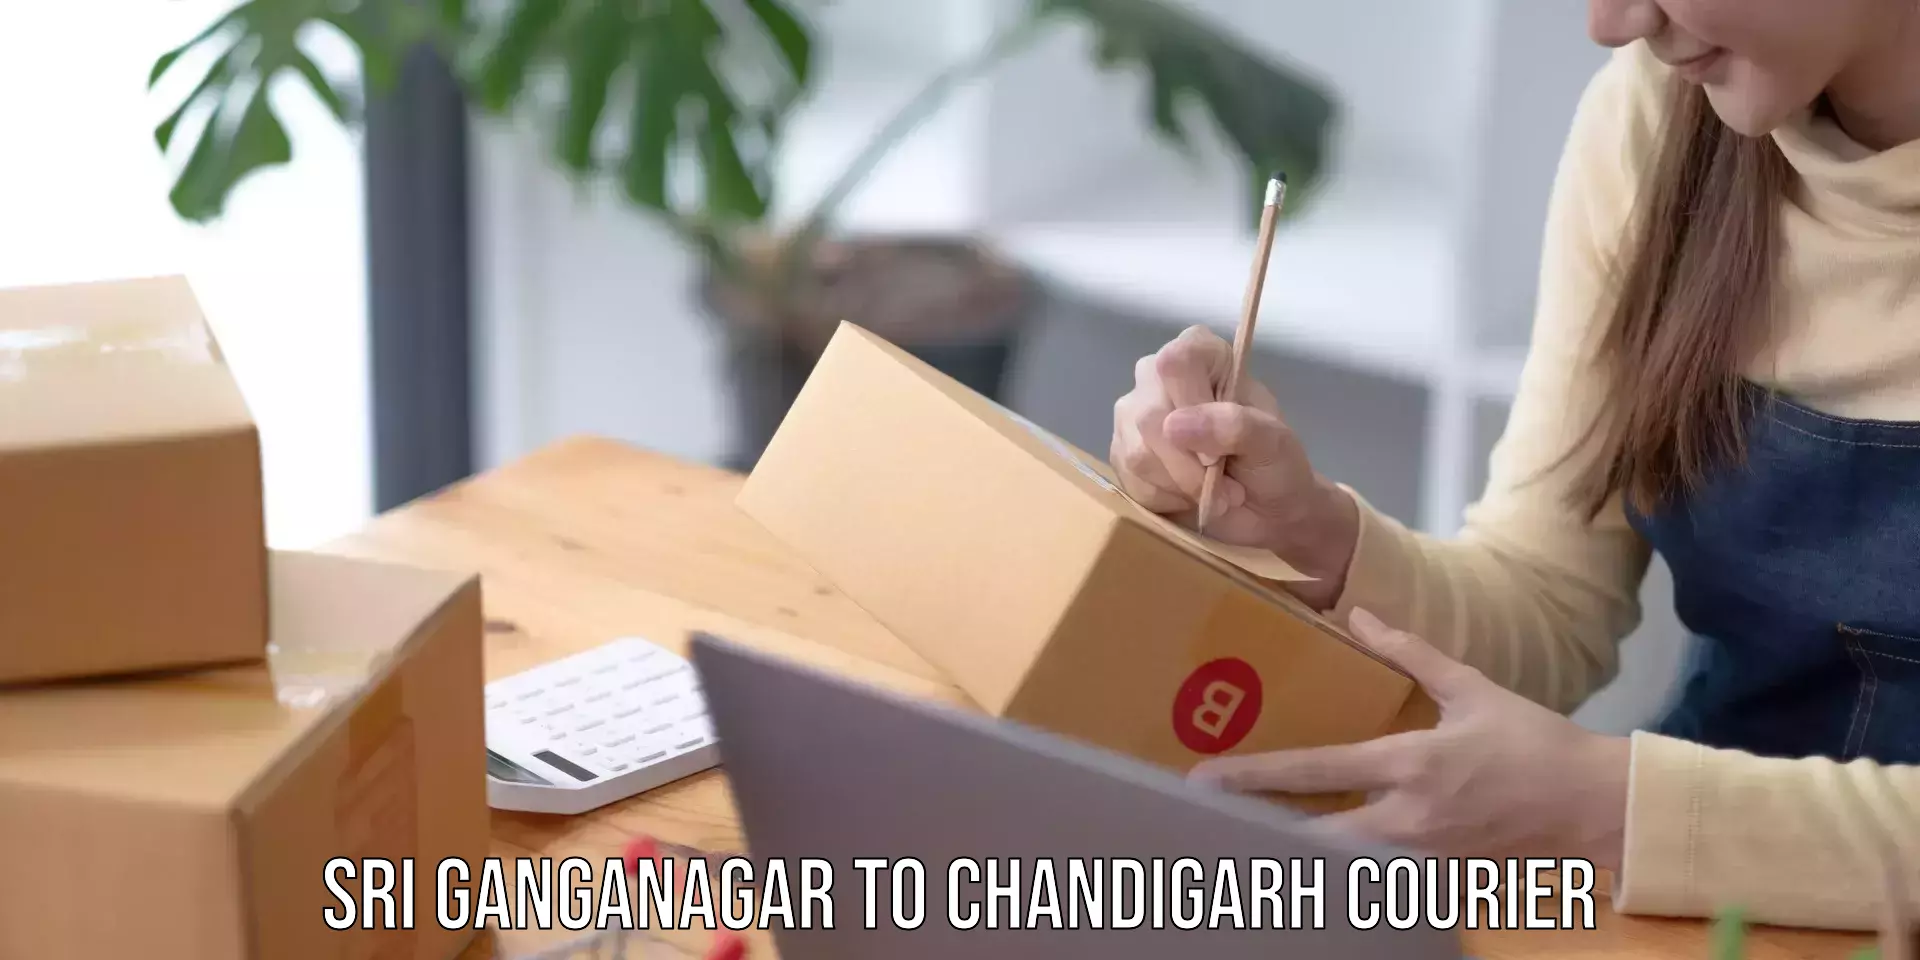 Cash on delivery service Sri Ganganagar to Chandigarh